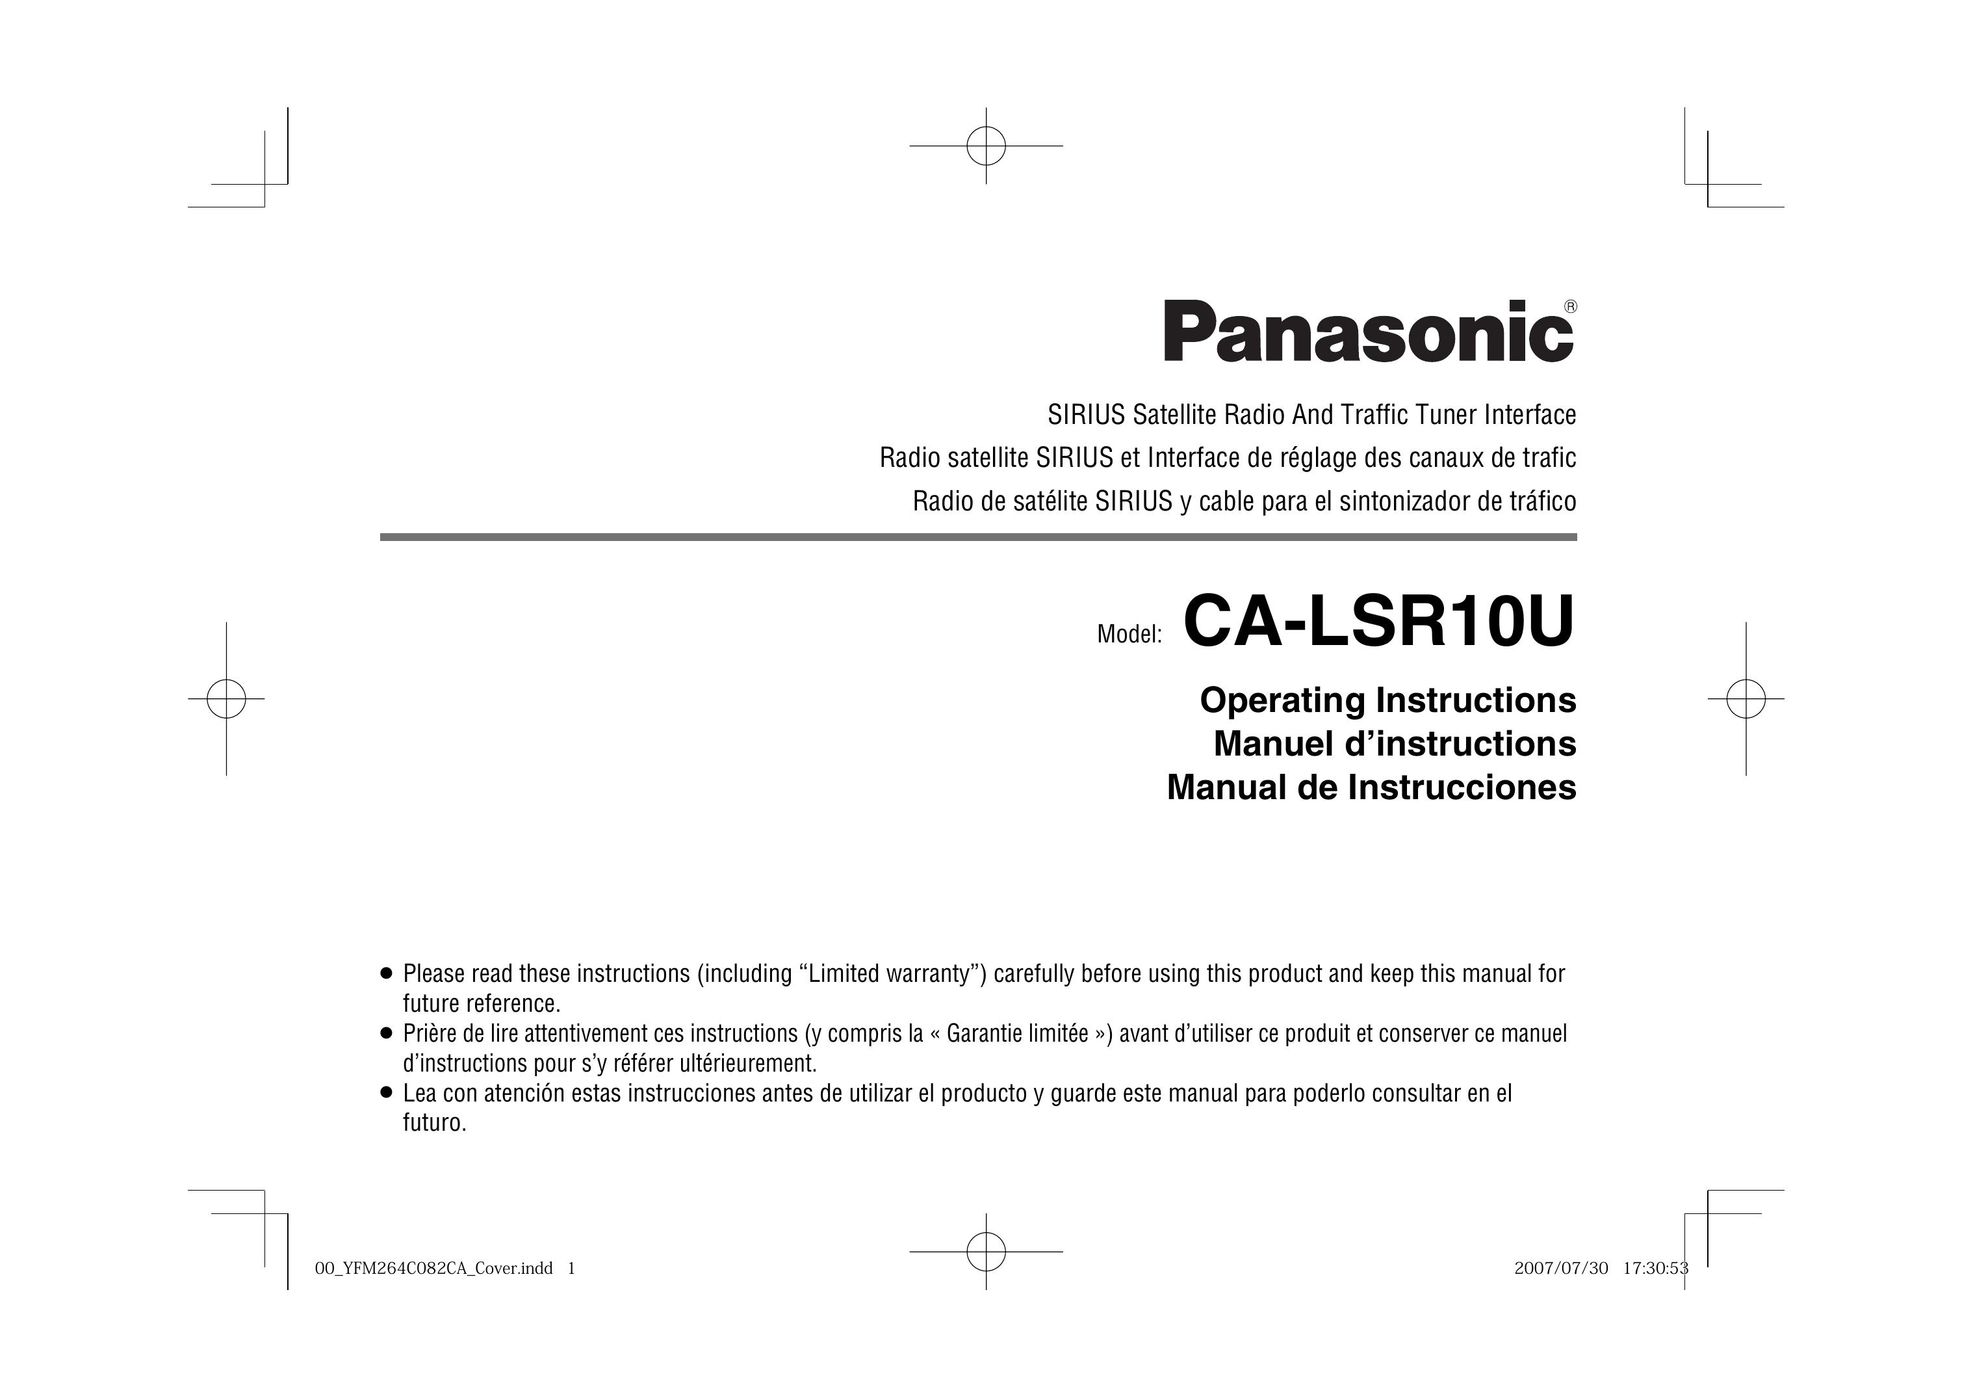 Panasonic CA-LSR10U Satellite Radio User Manual